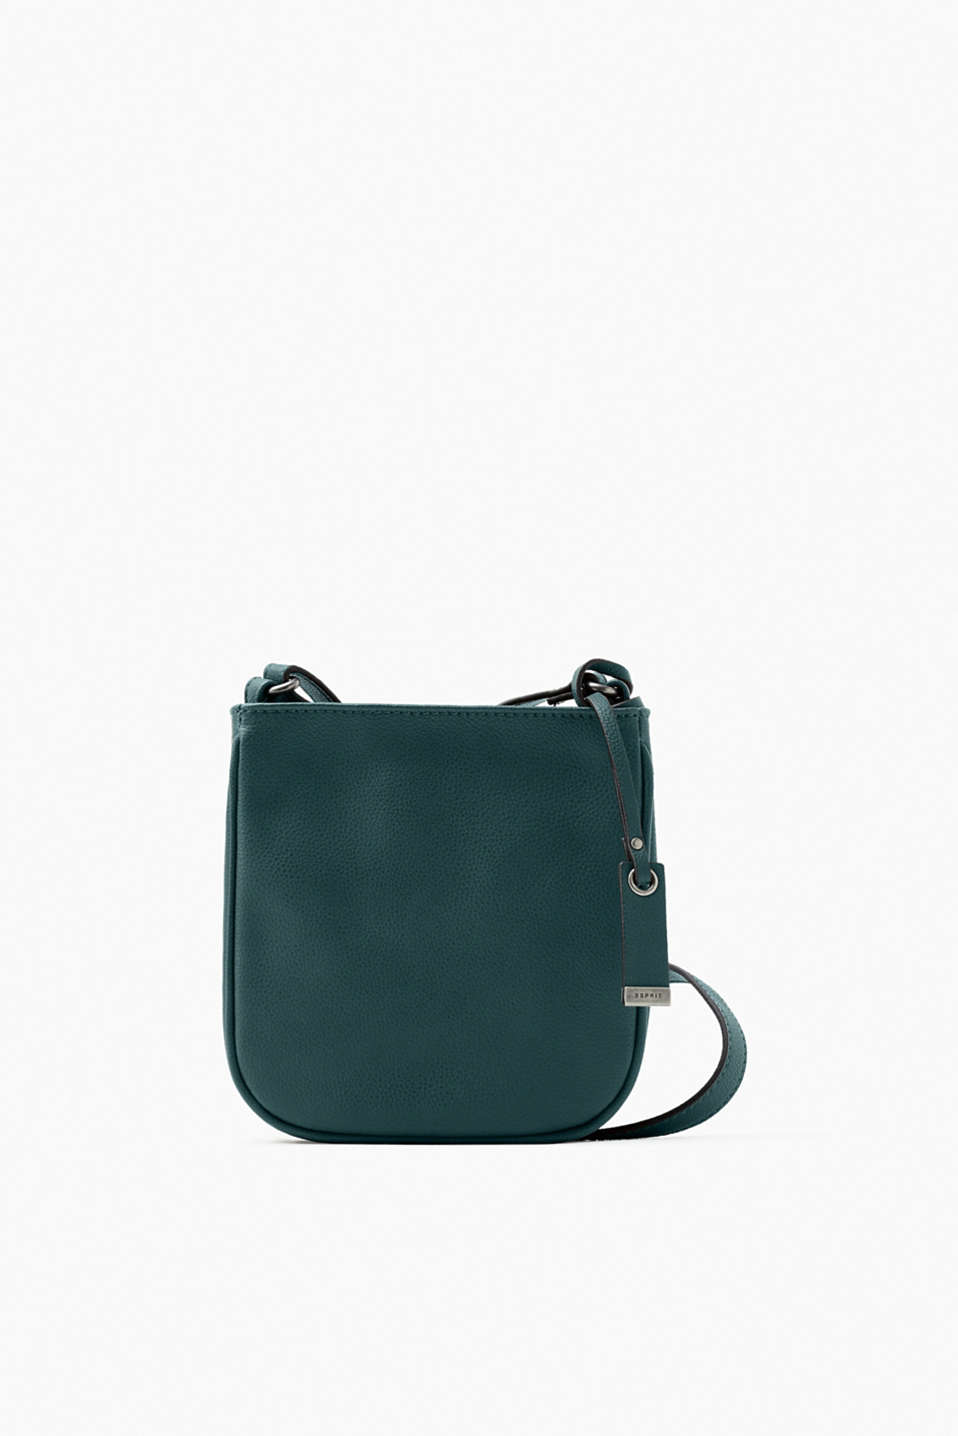 Esprit - Flat shoulder bag in faux leather at our Online Shop